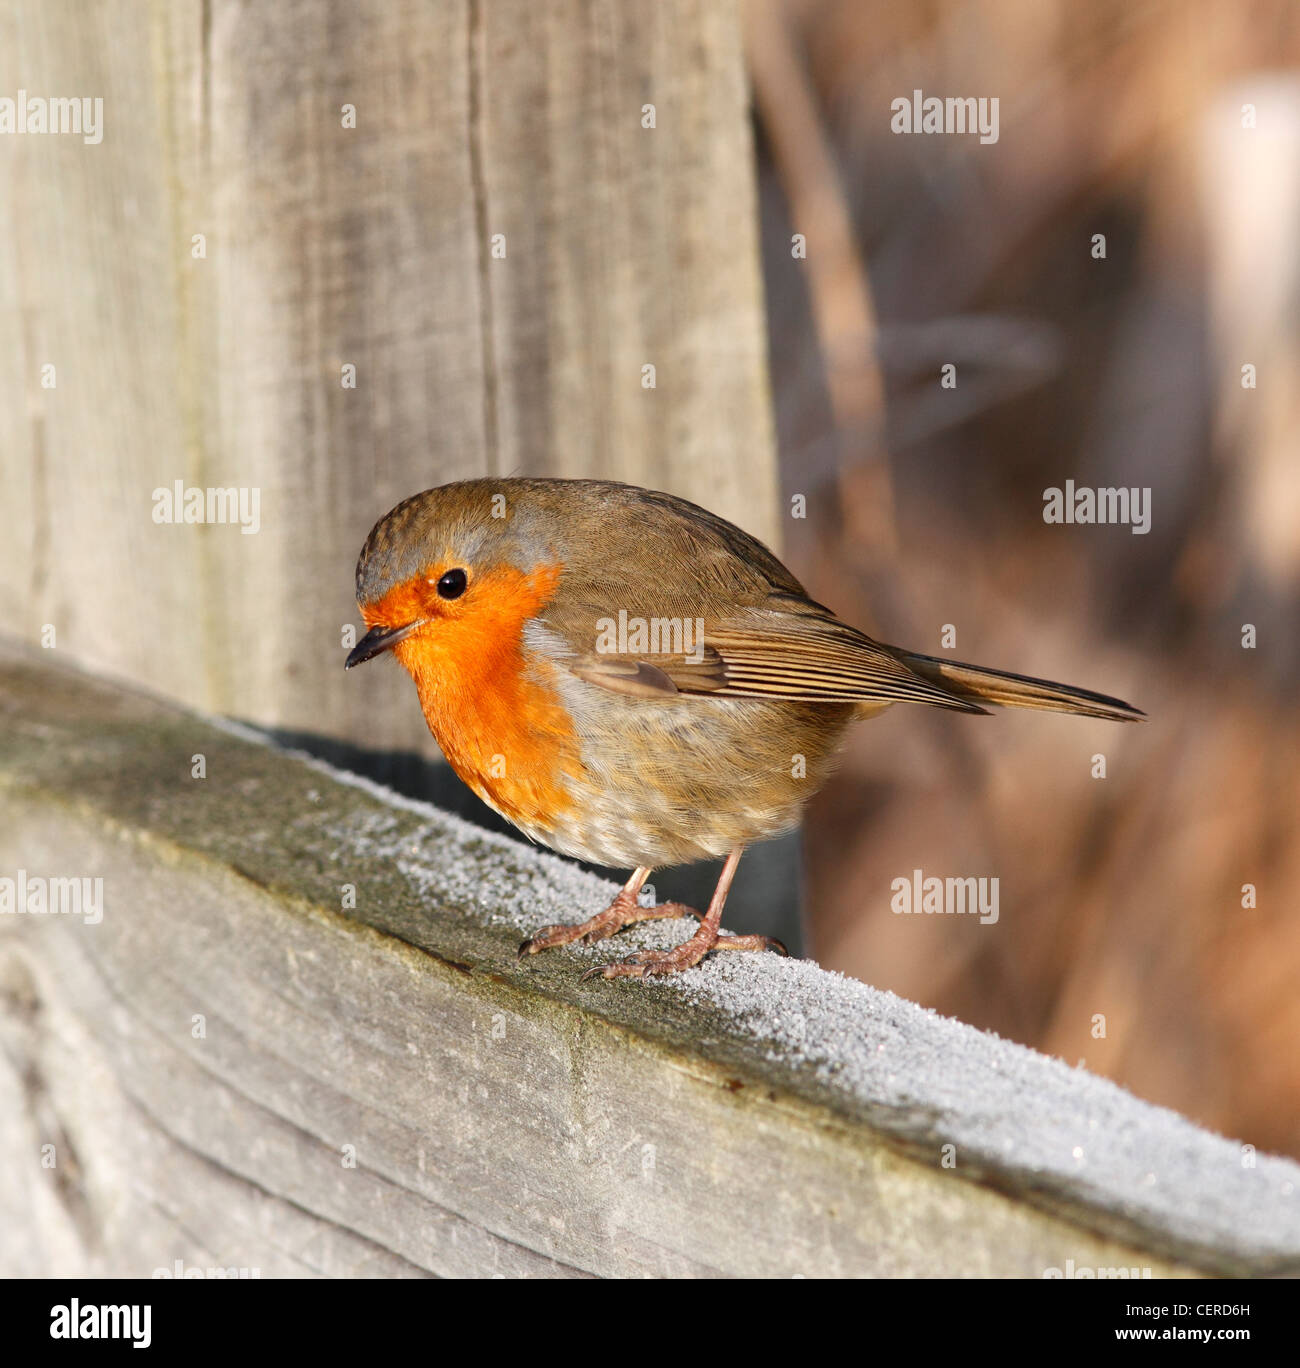 robin-redbreast-on-fence-in-winter-CERD6